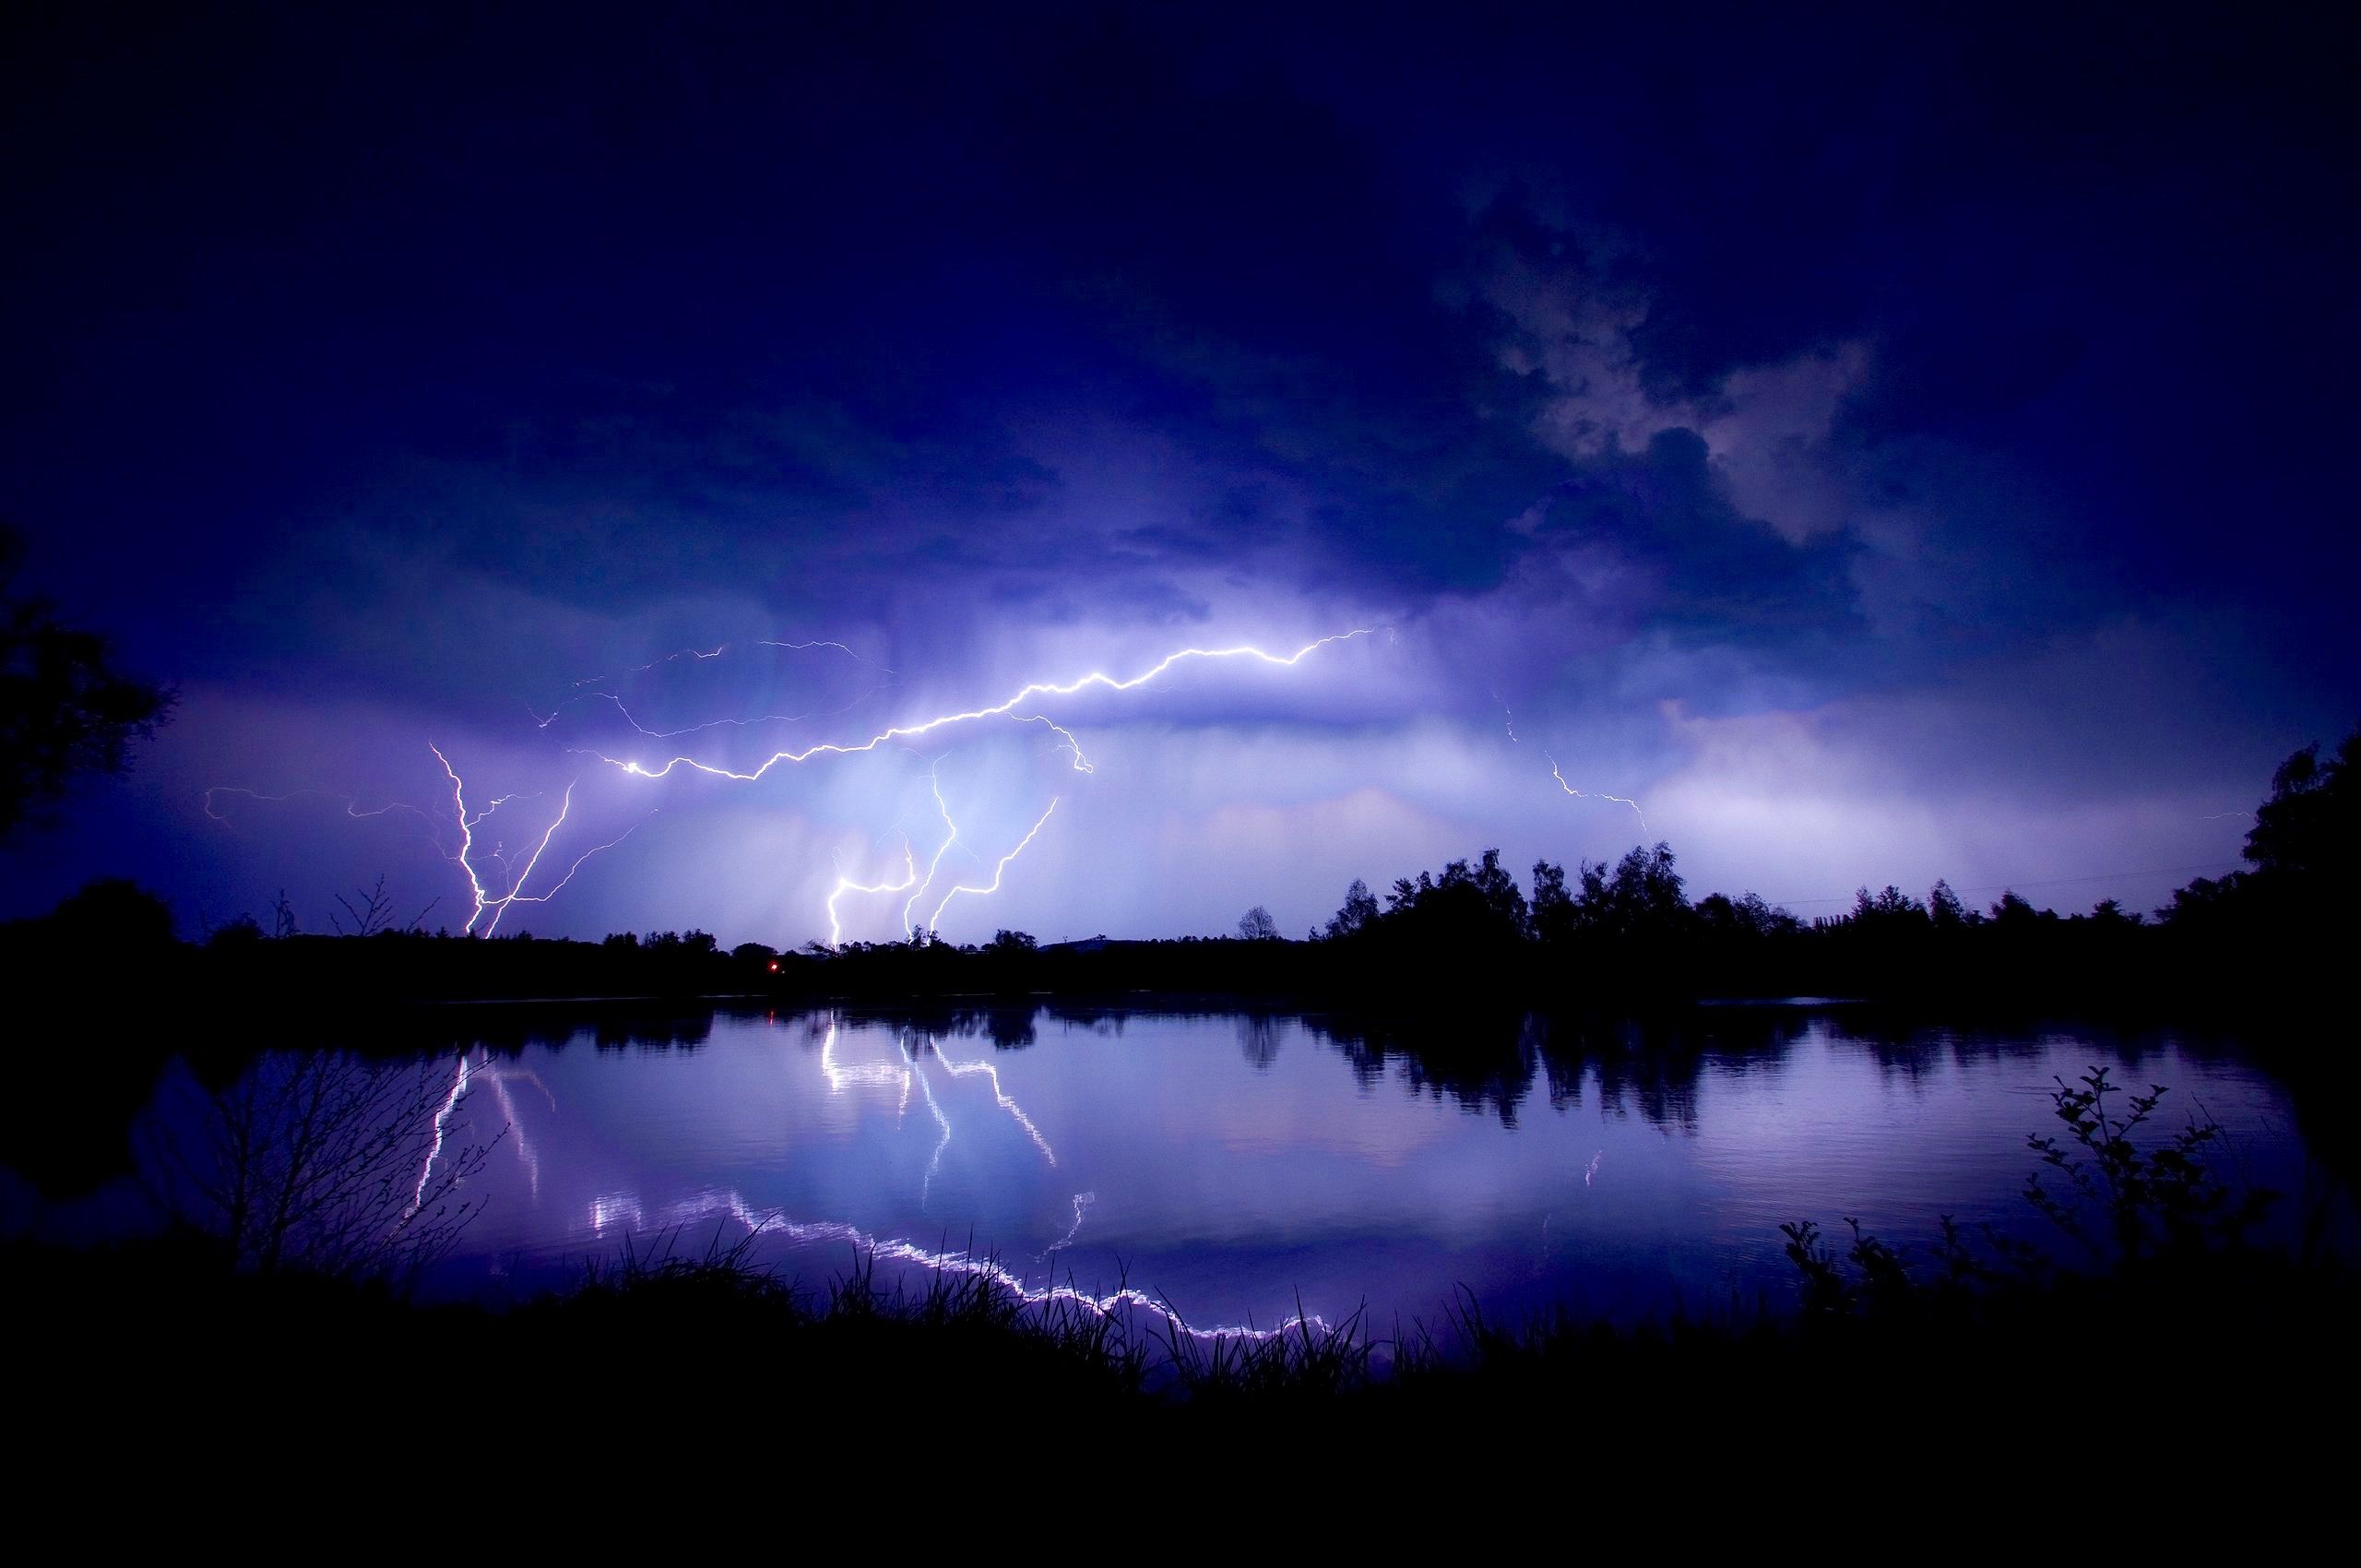 clouds_lightning_pond_reflection_night_2560x1700.jpg